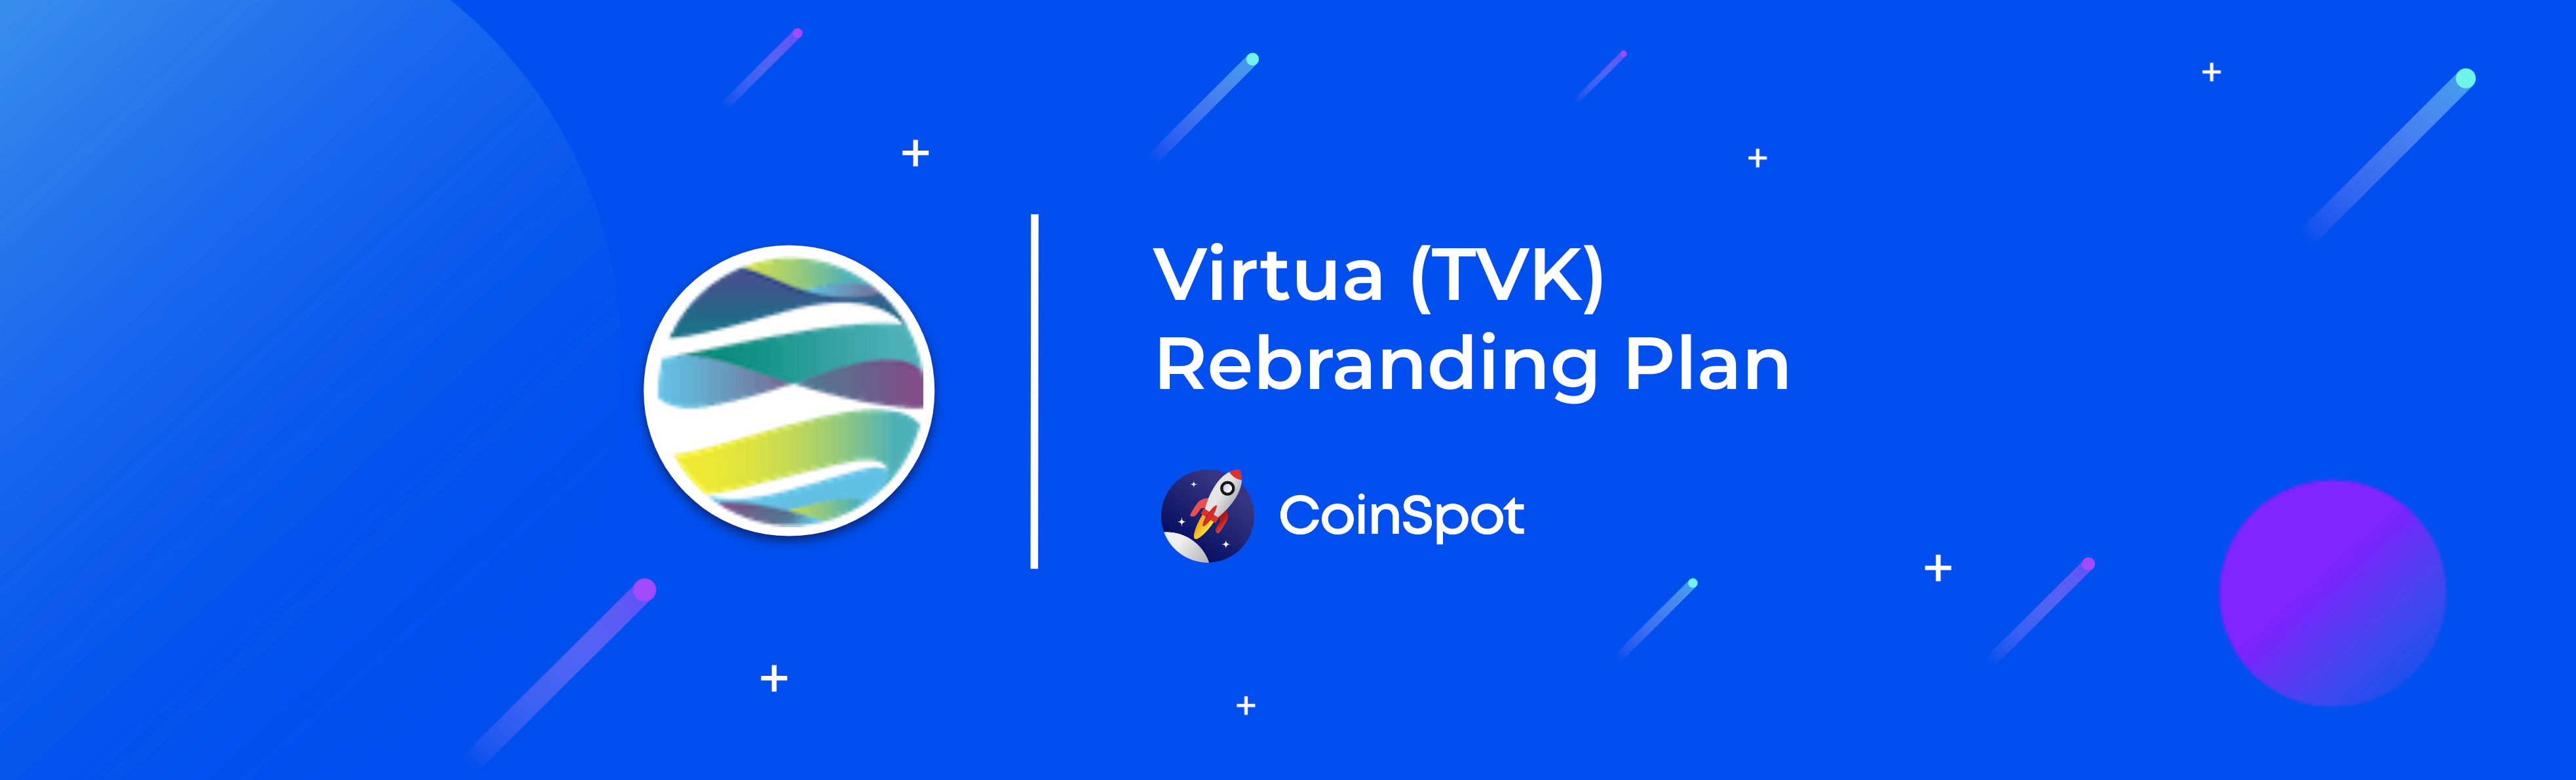 CoinSpot - Virtua Rebranding Plan.png